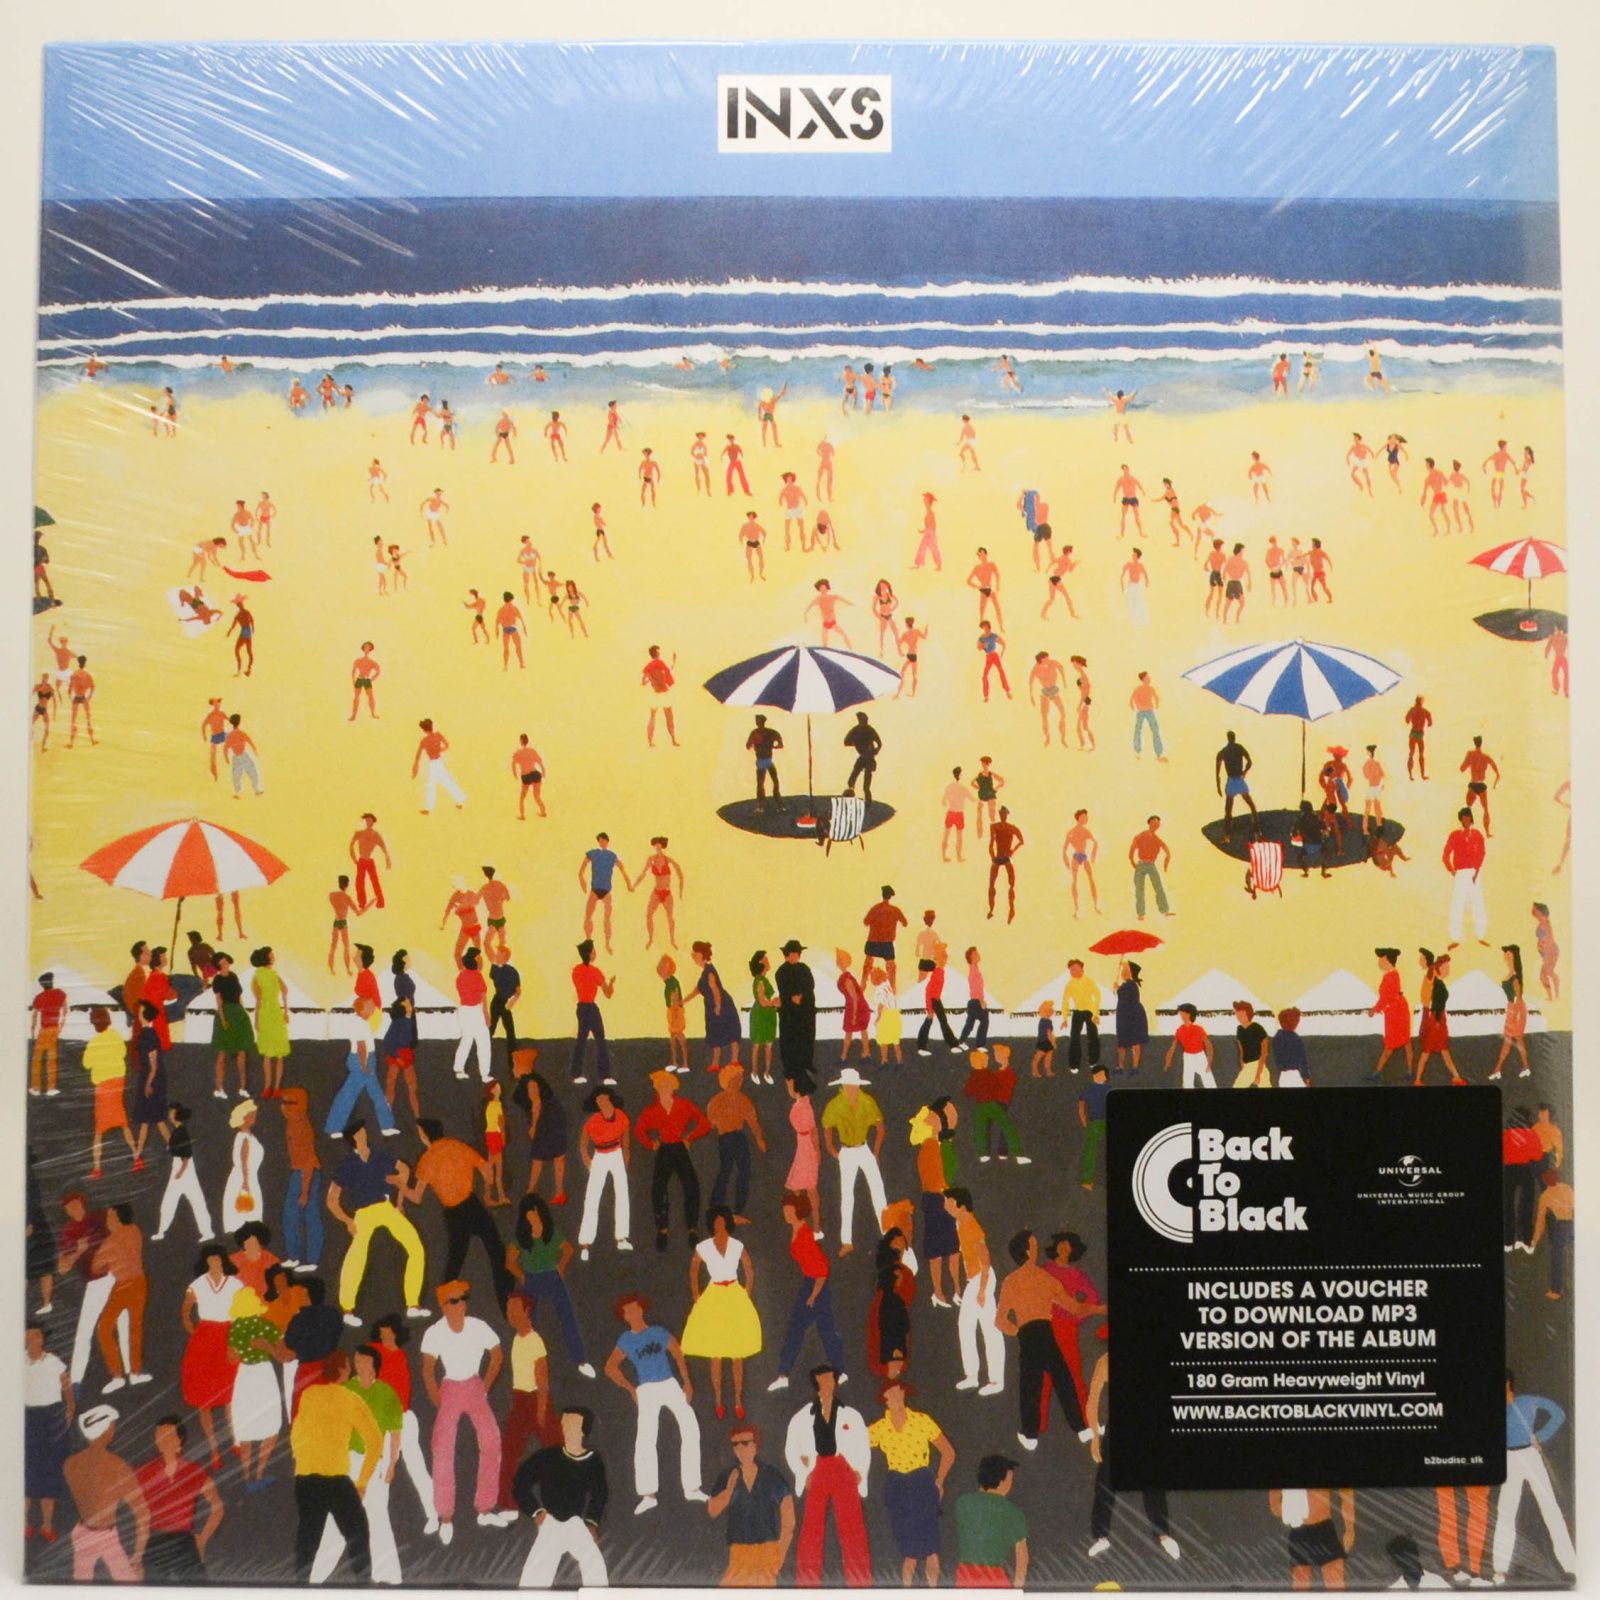 INXS, 1980